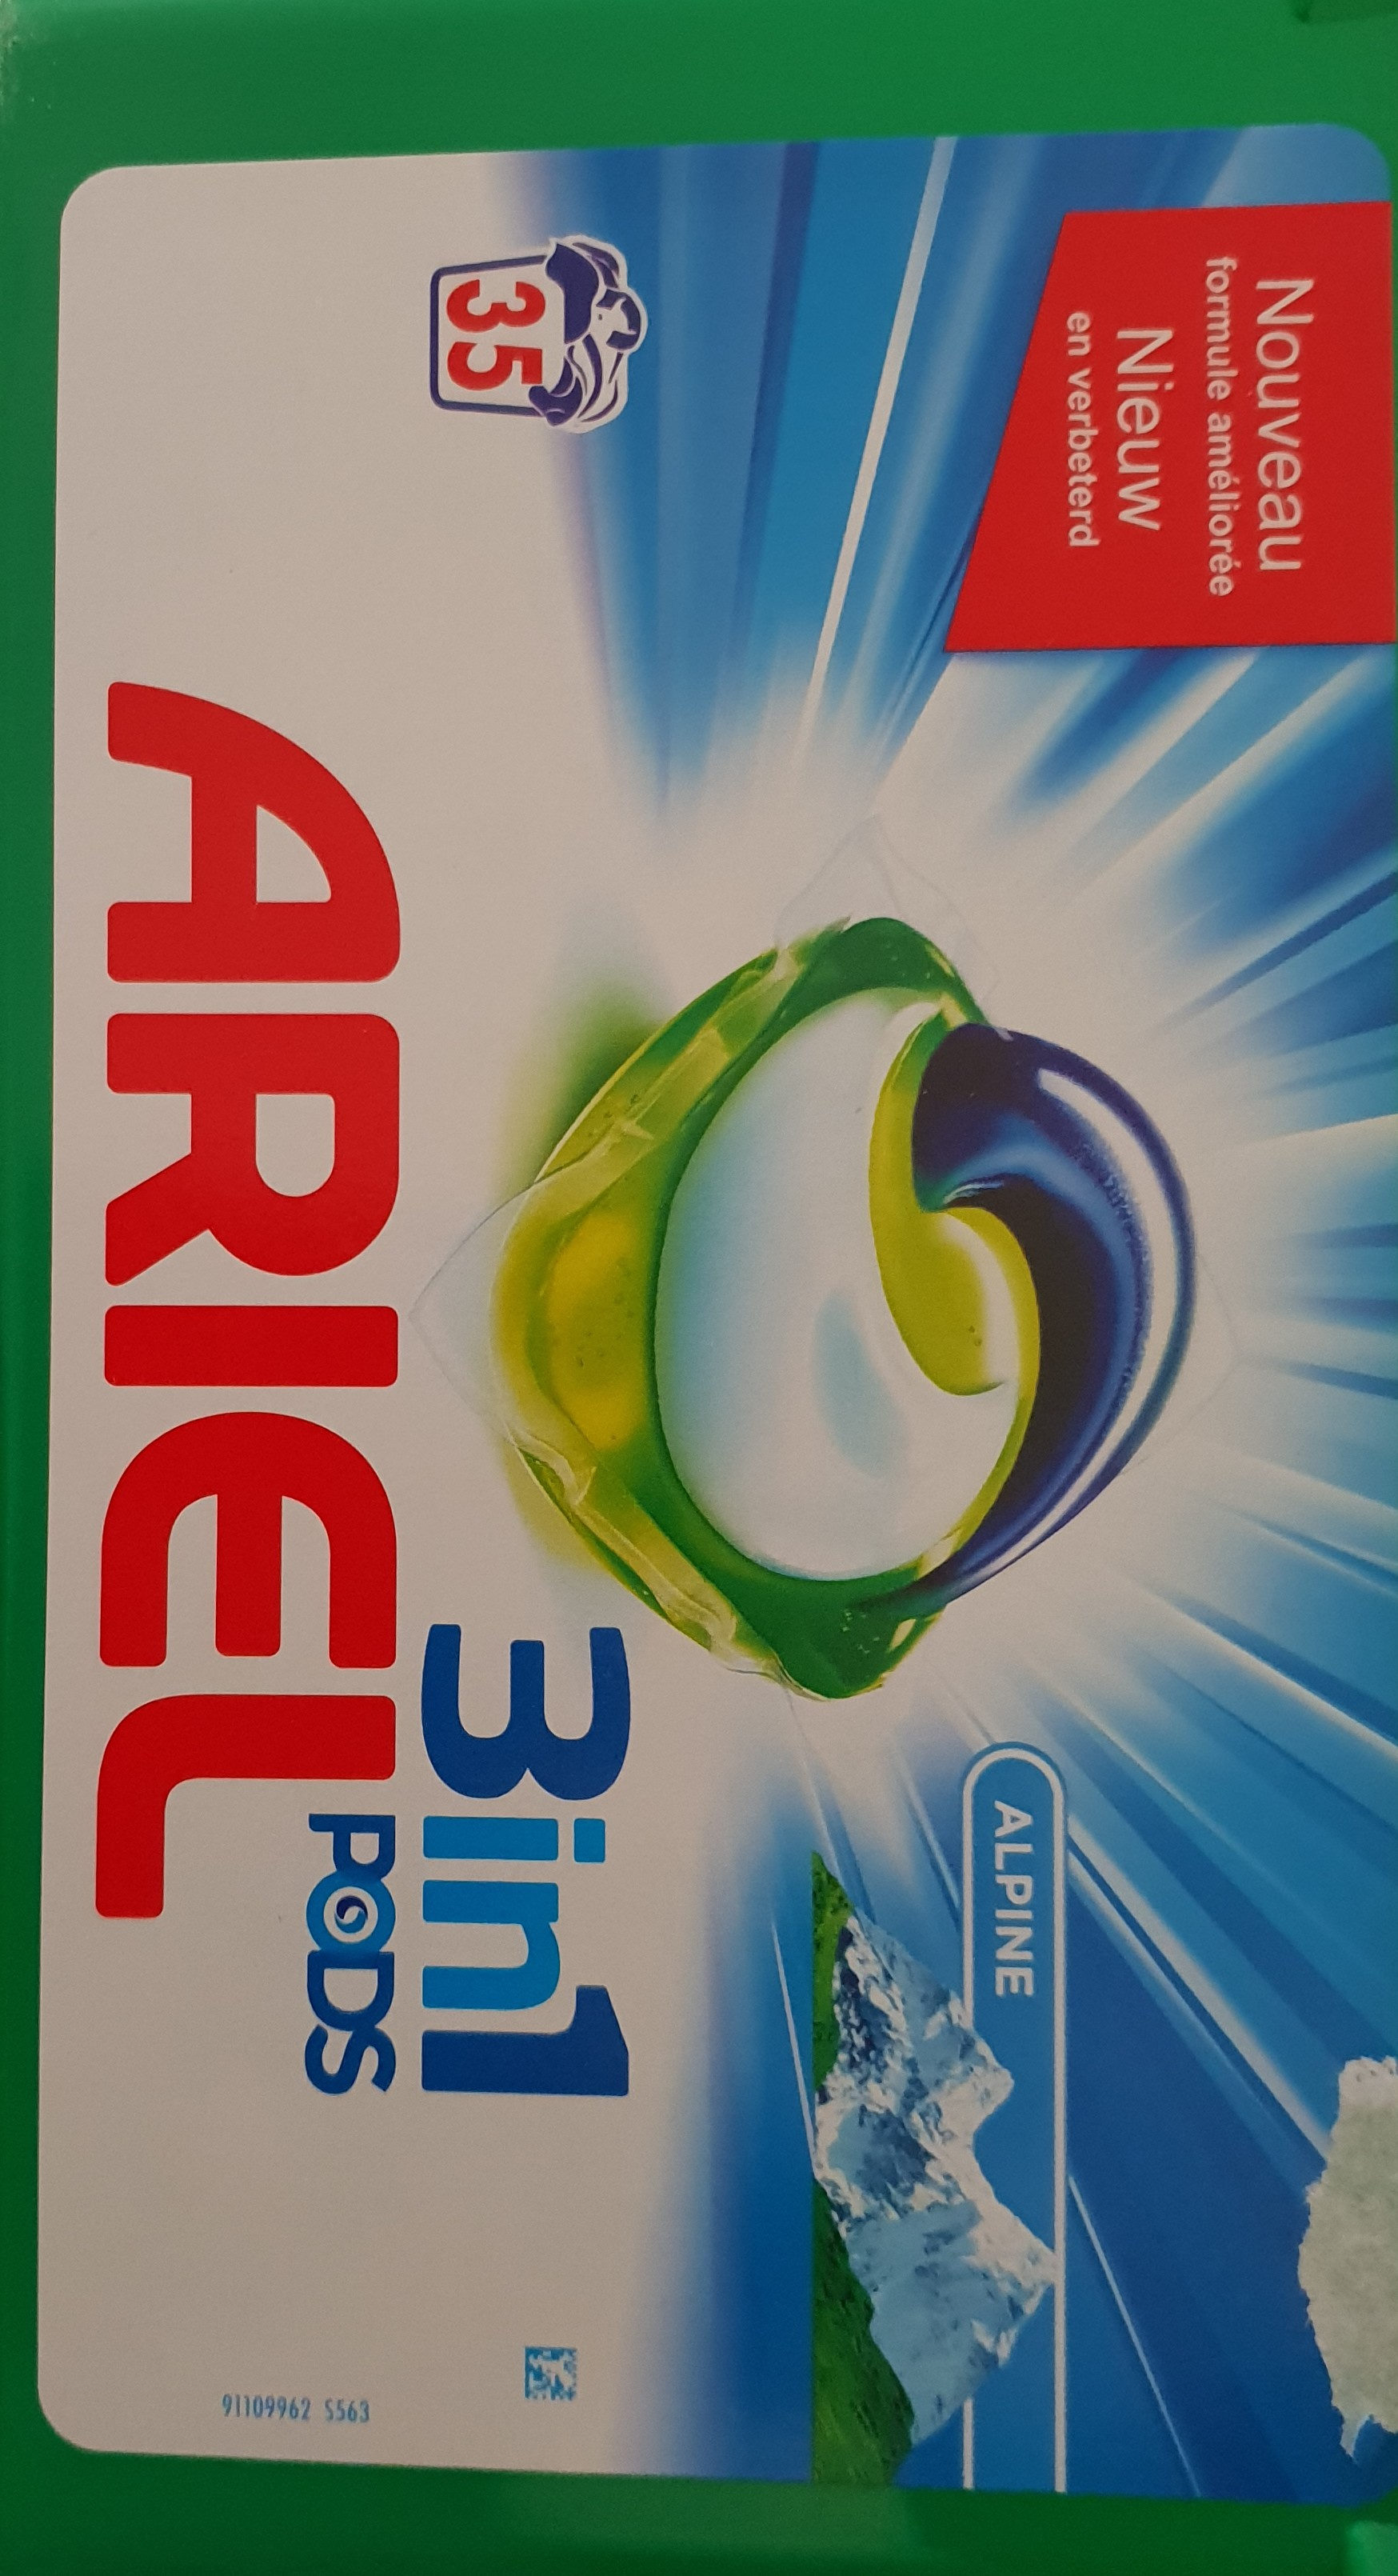 ariel 3 en 1 pods - Product - fr